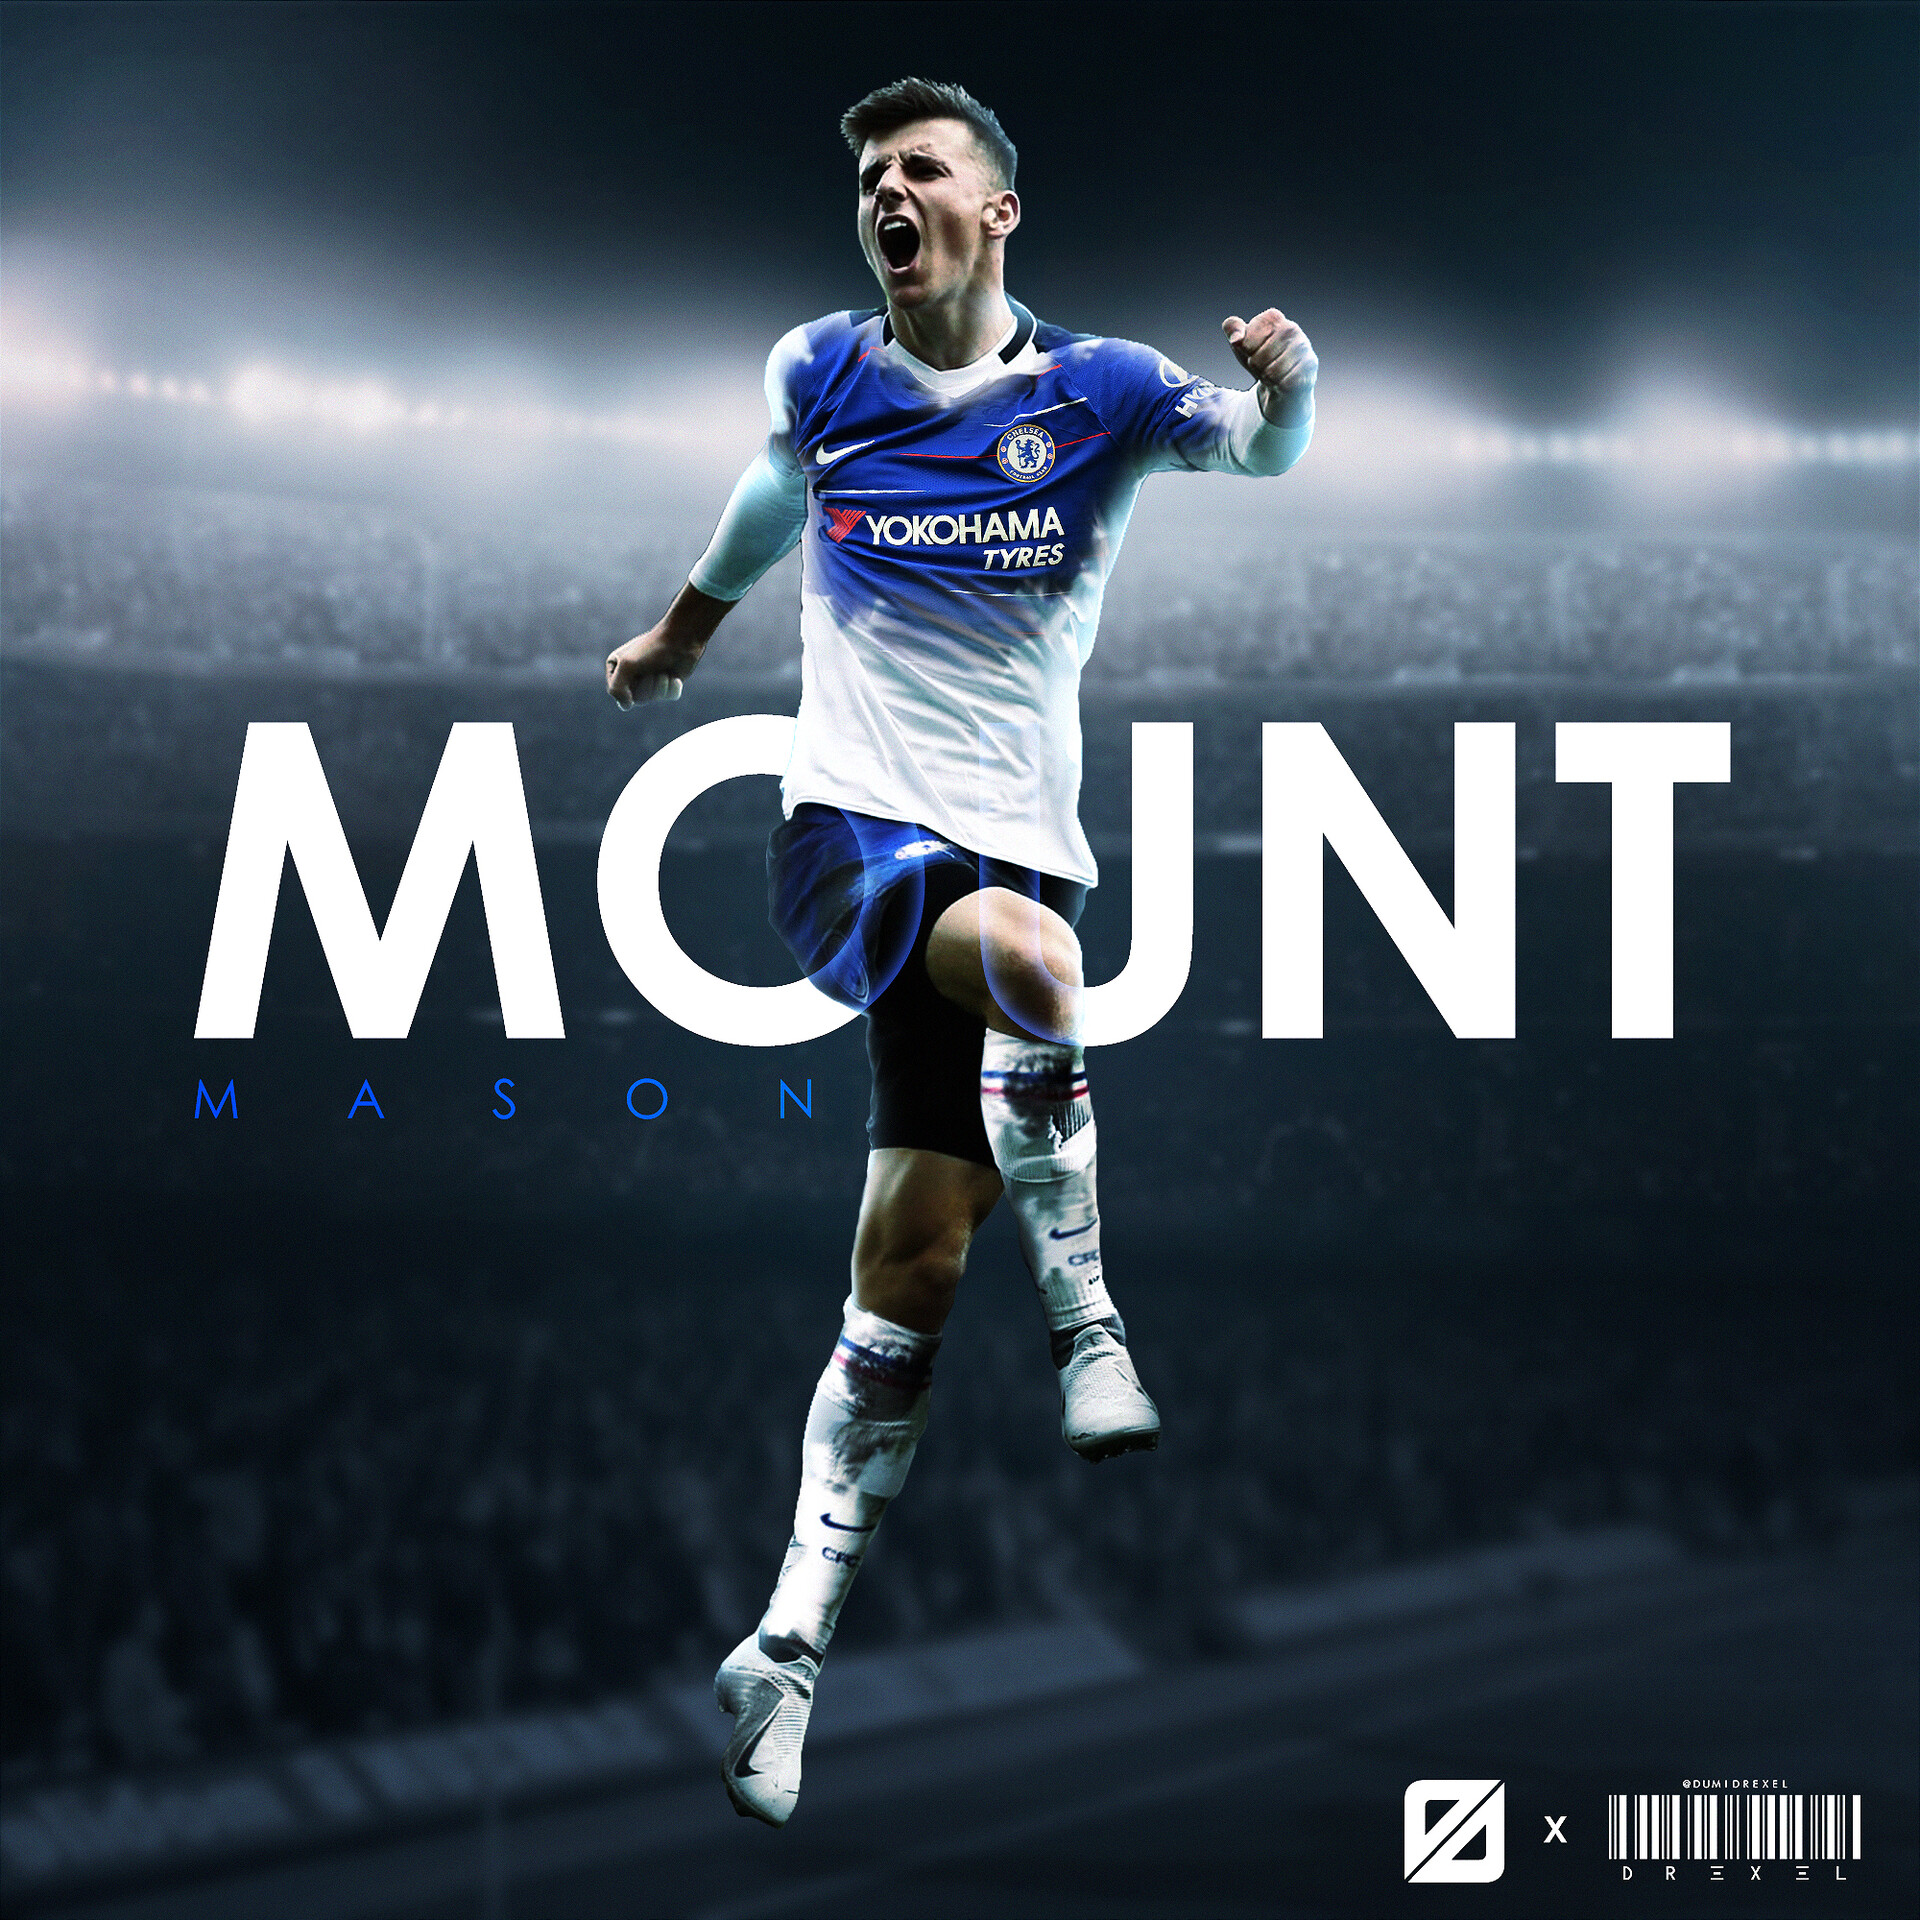 Ian Maatsen  Profile  Official Site  Chelsea Football Club